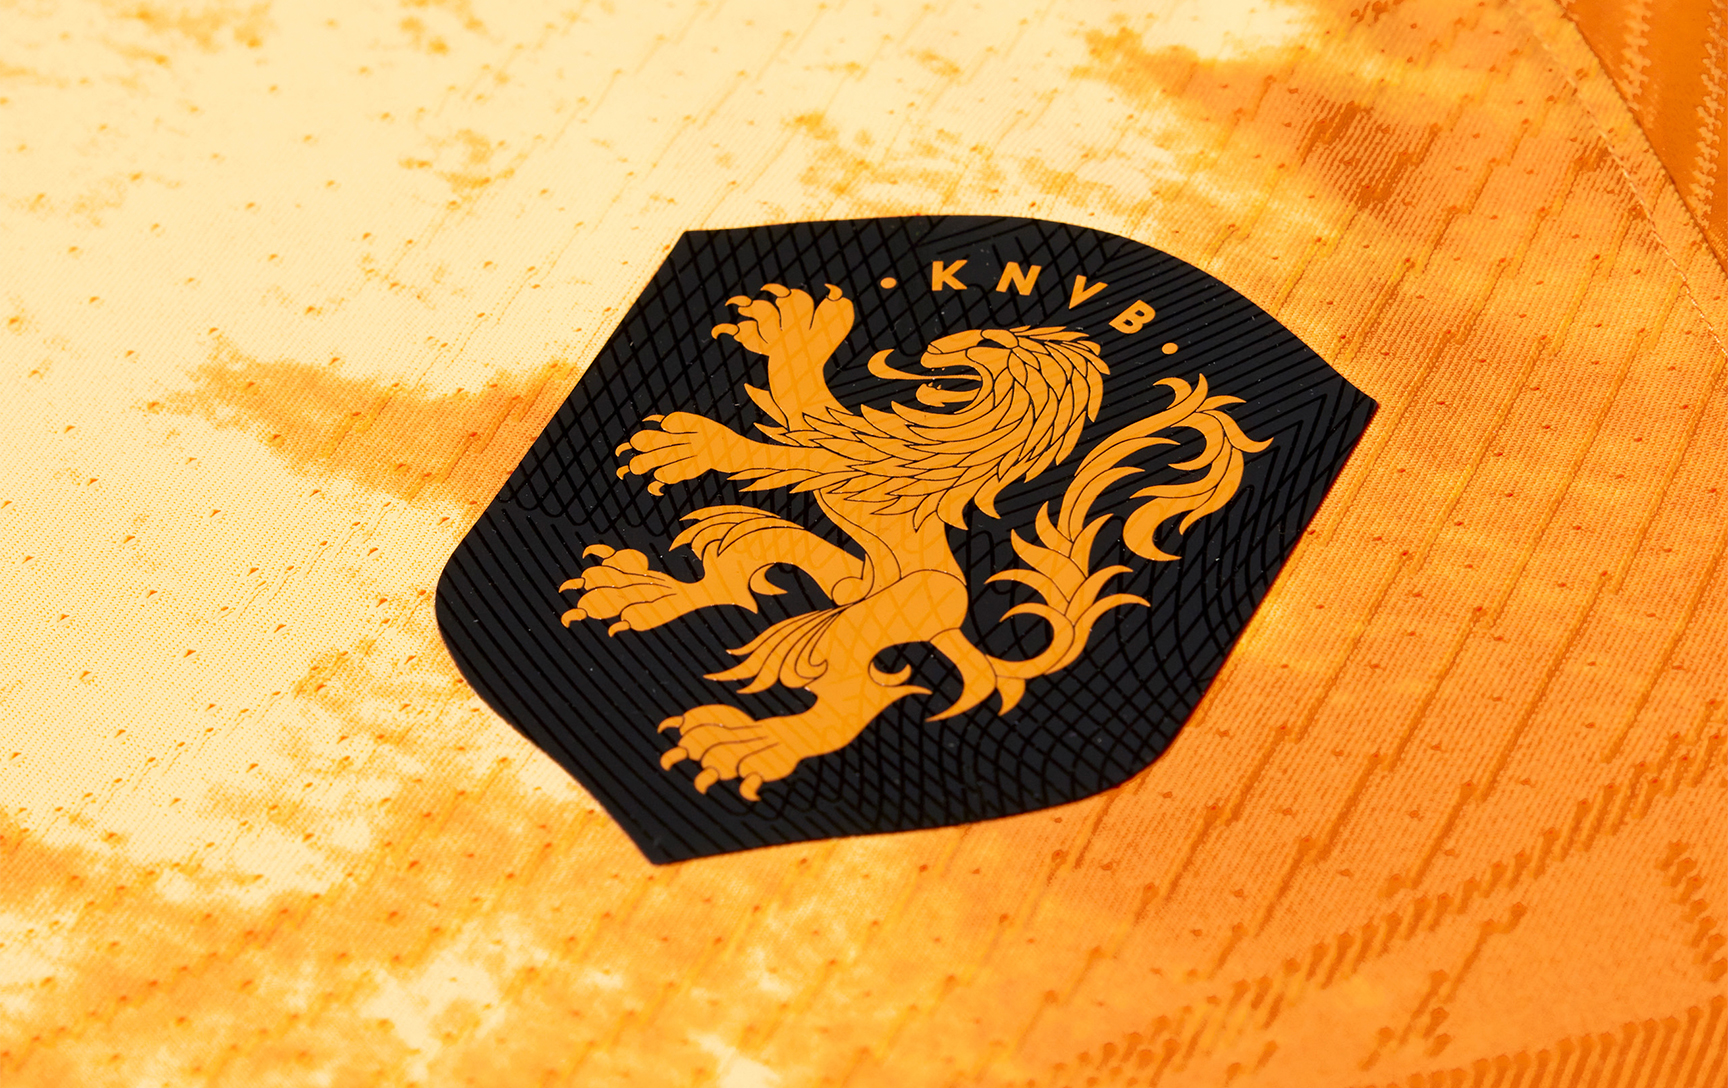 Is Netherlands' 2022 World Cup home kit the weirdest ever?